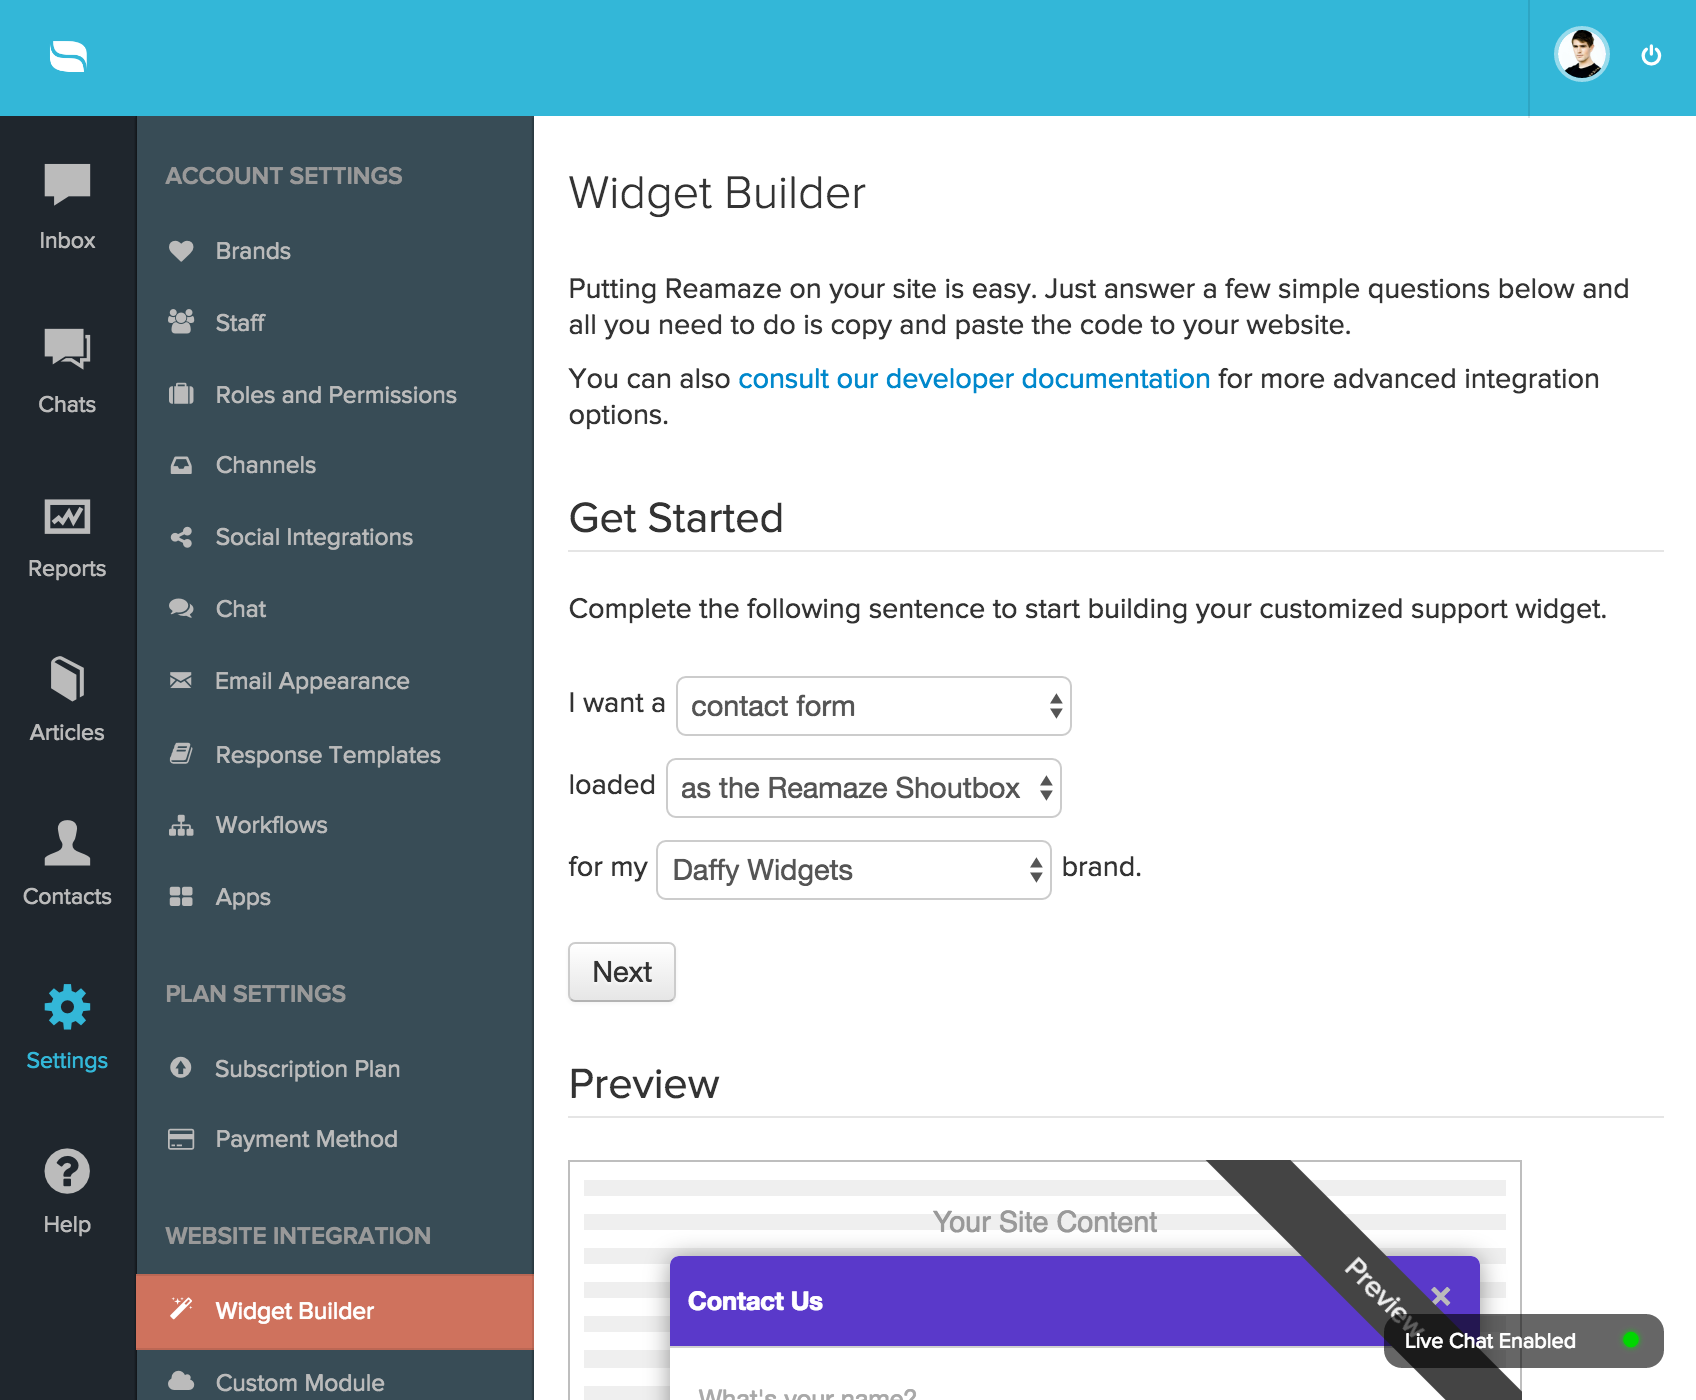 Widget Builder - Customize your support widget with ease